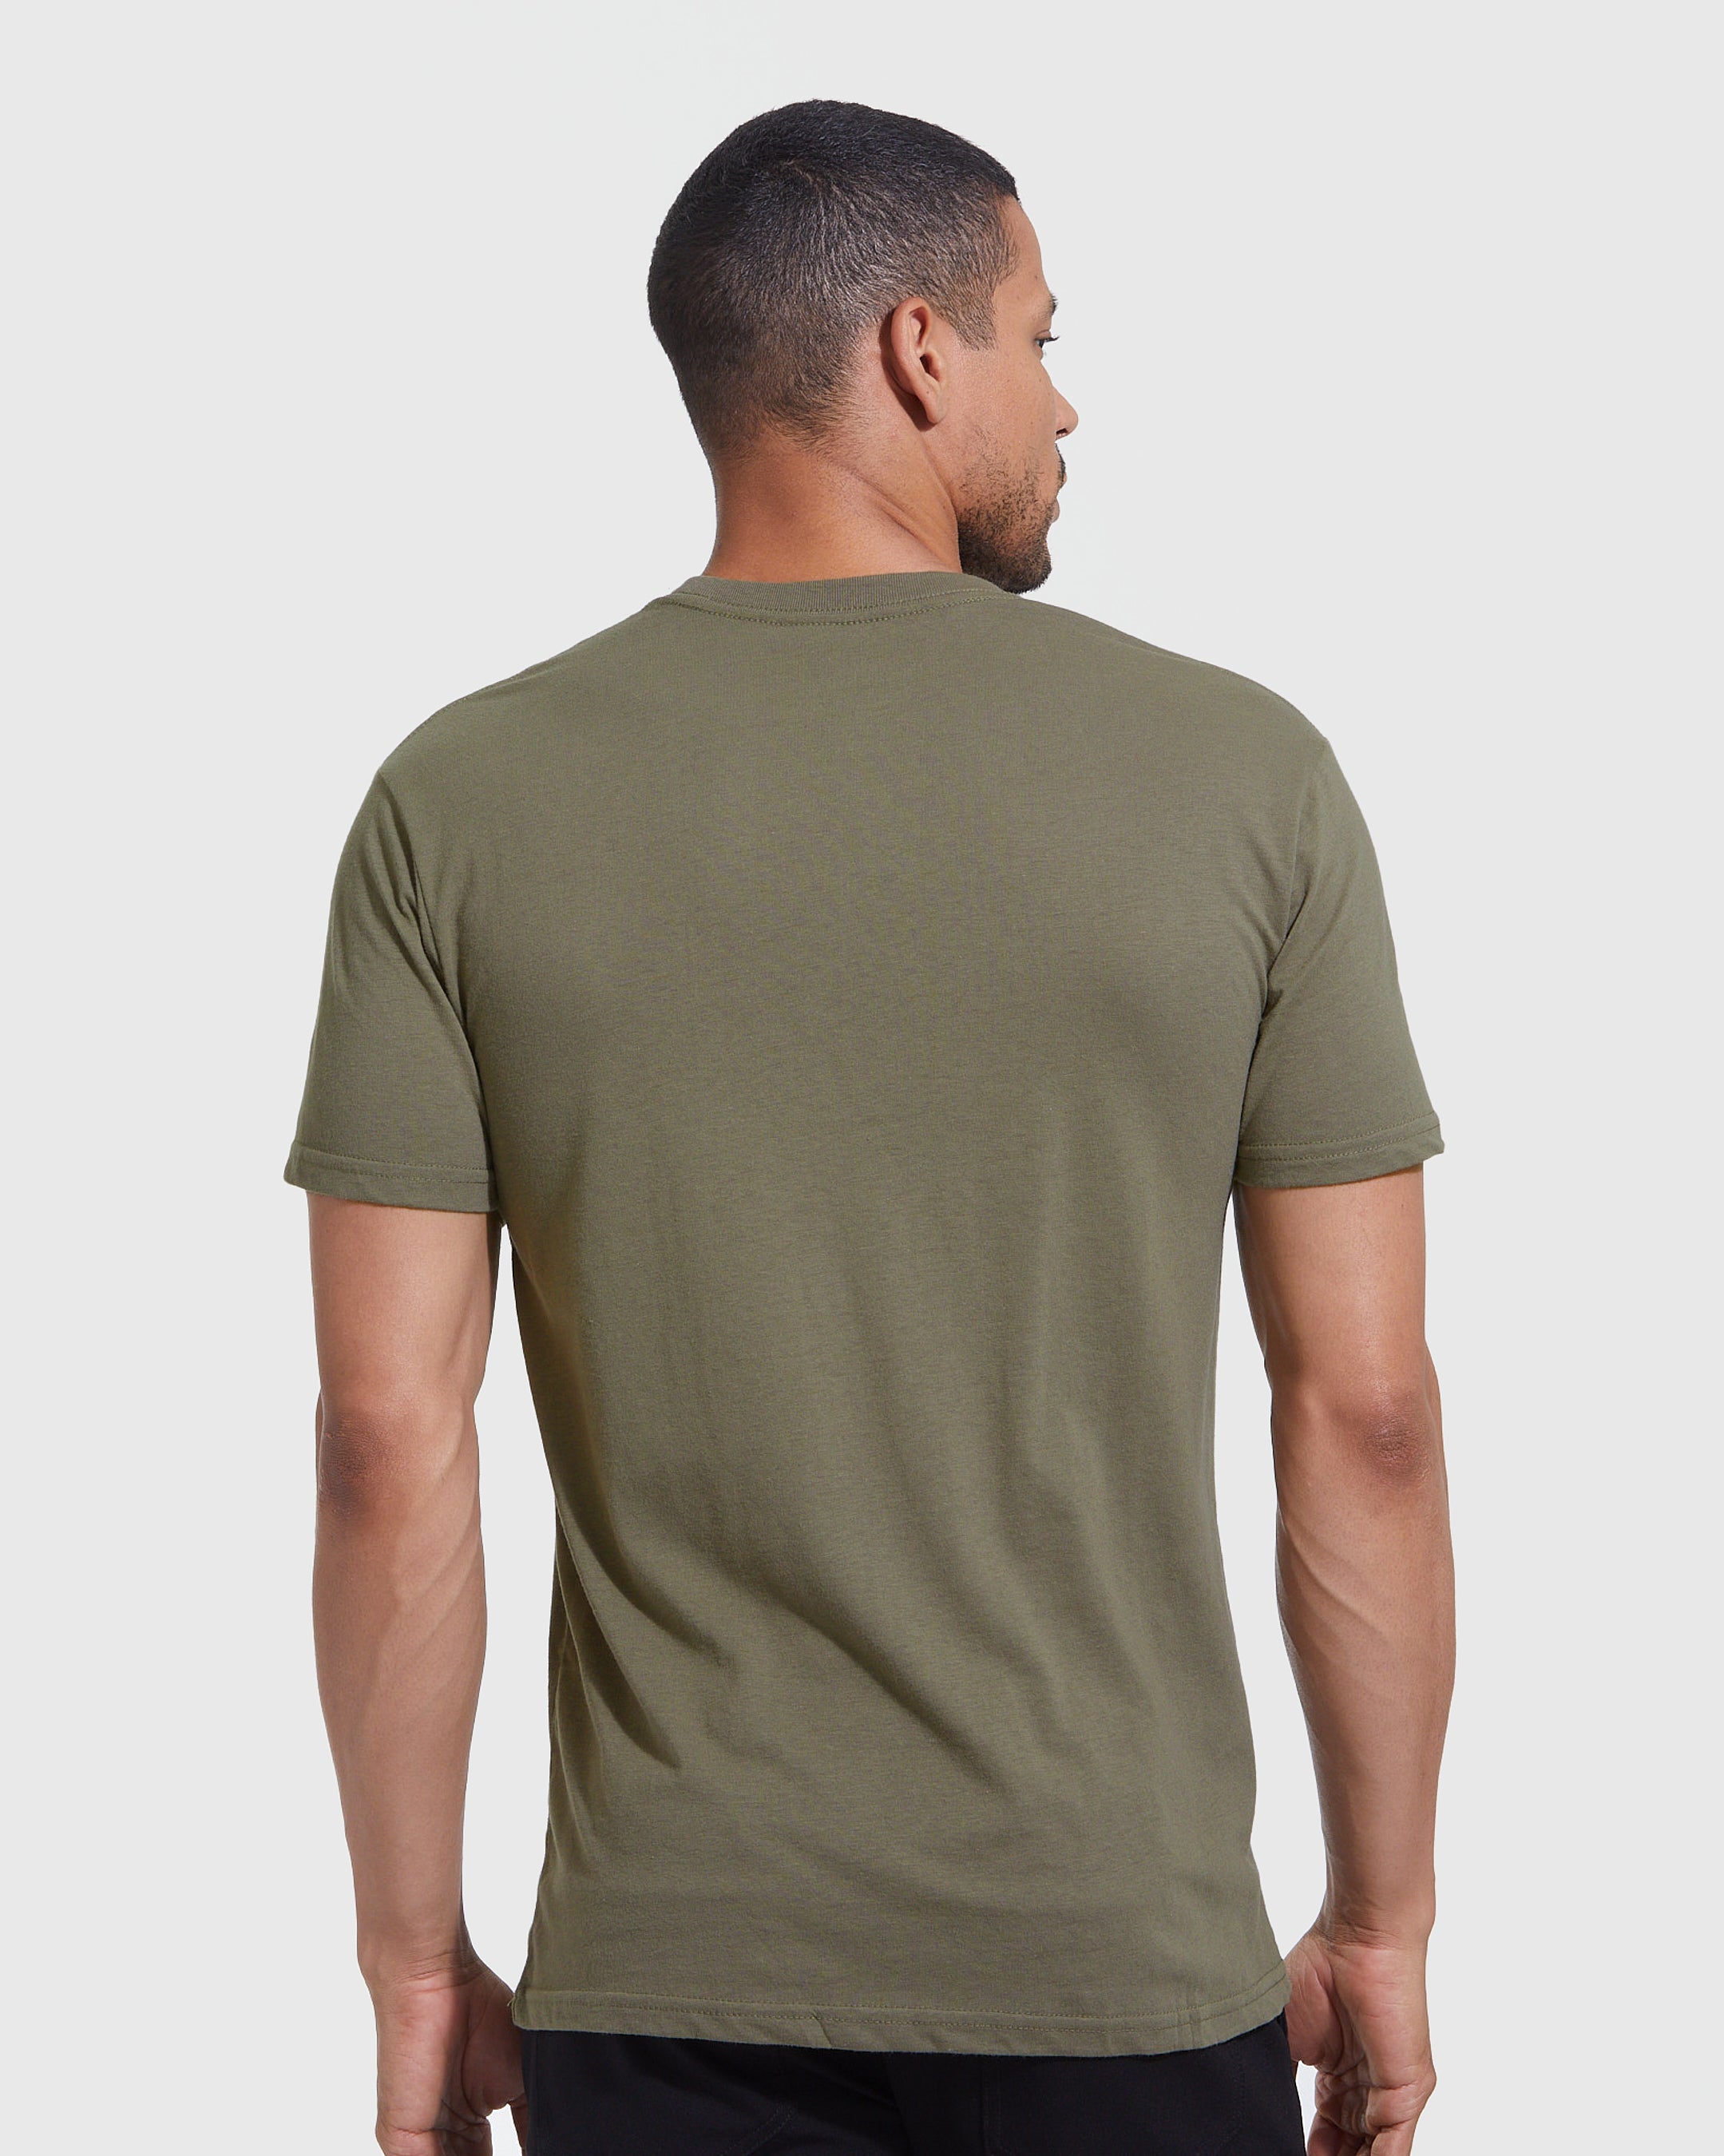 – Military T-Shirt Classic True Green Crew Neck